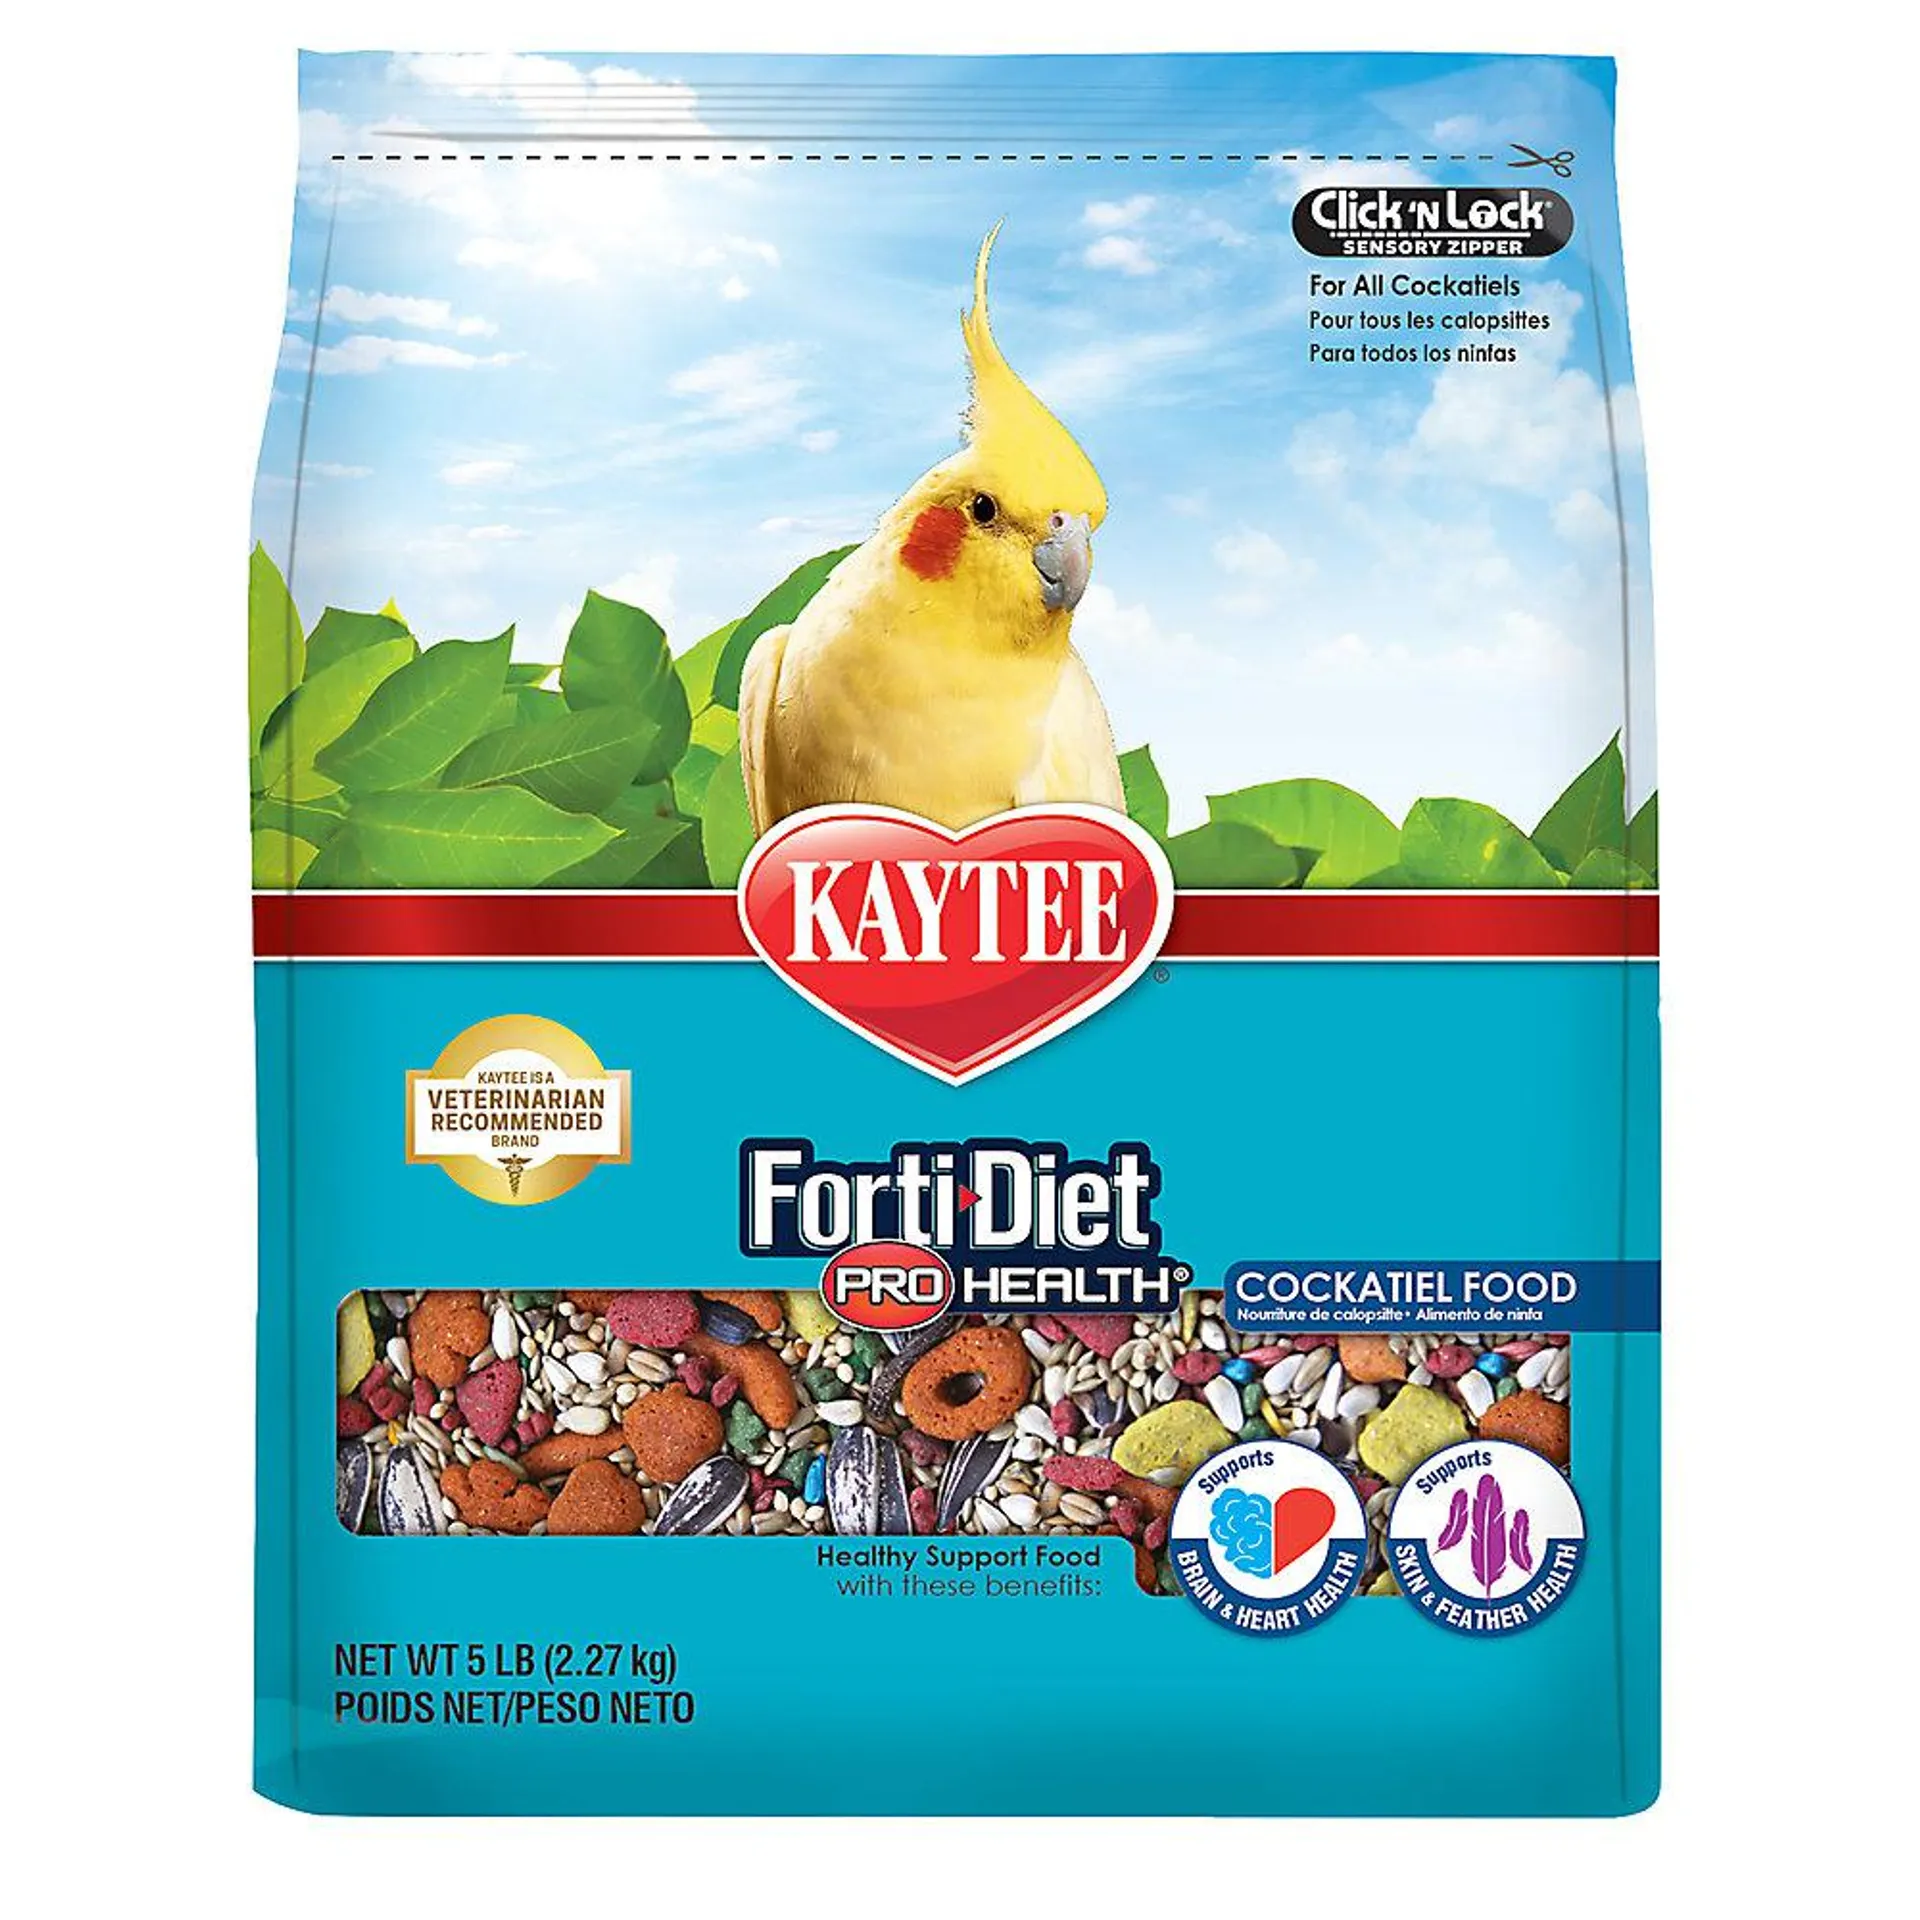 KAYTEE® Forti-Diet Pro Health Cockatiel Food